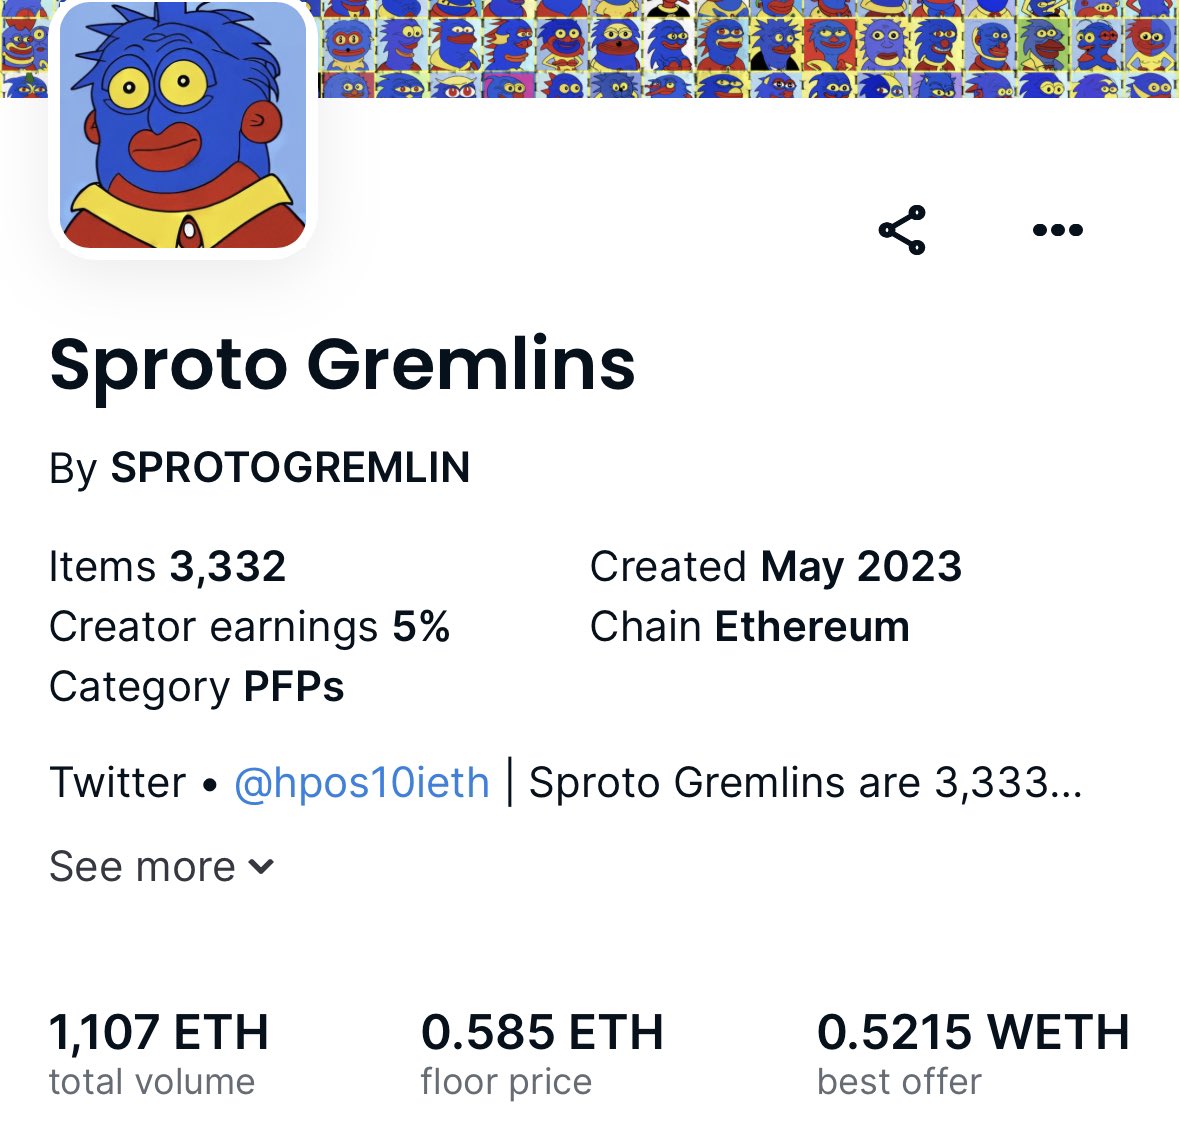 Sproto Gremlins are 0.585